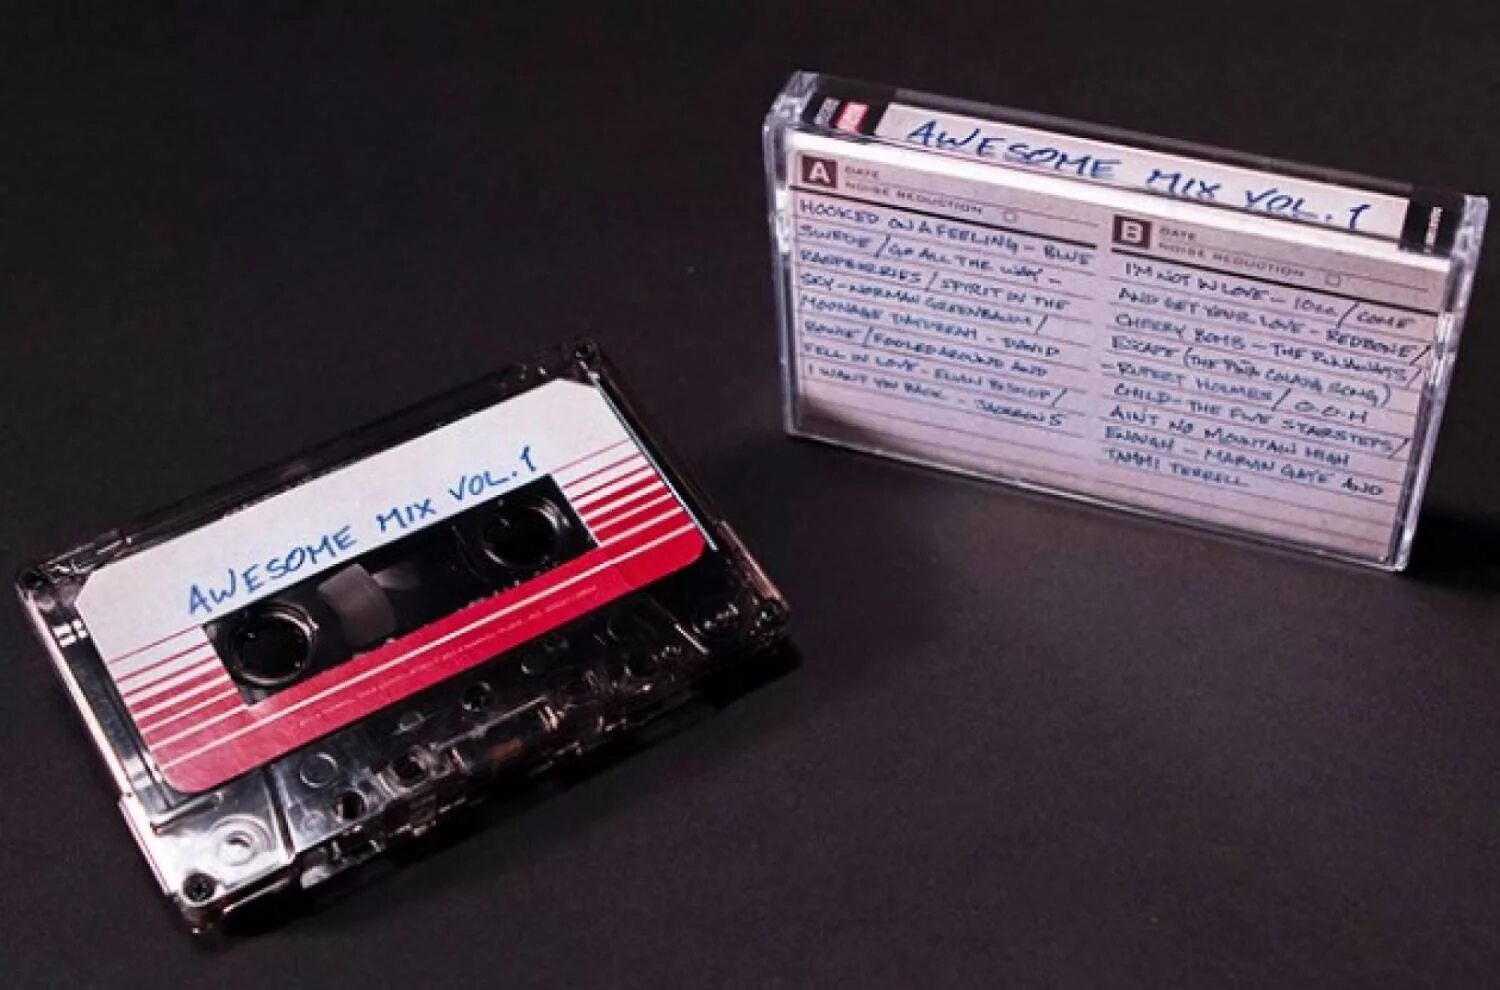 Аудиокассета Awesome Mix Стражи Галактики. Guardians of the Galaxy кассета. Аудио Коссета Стражи Галактики. Аудиокассета track.